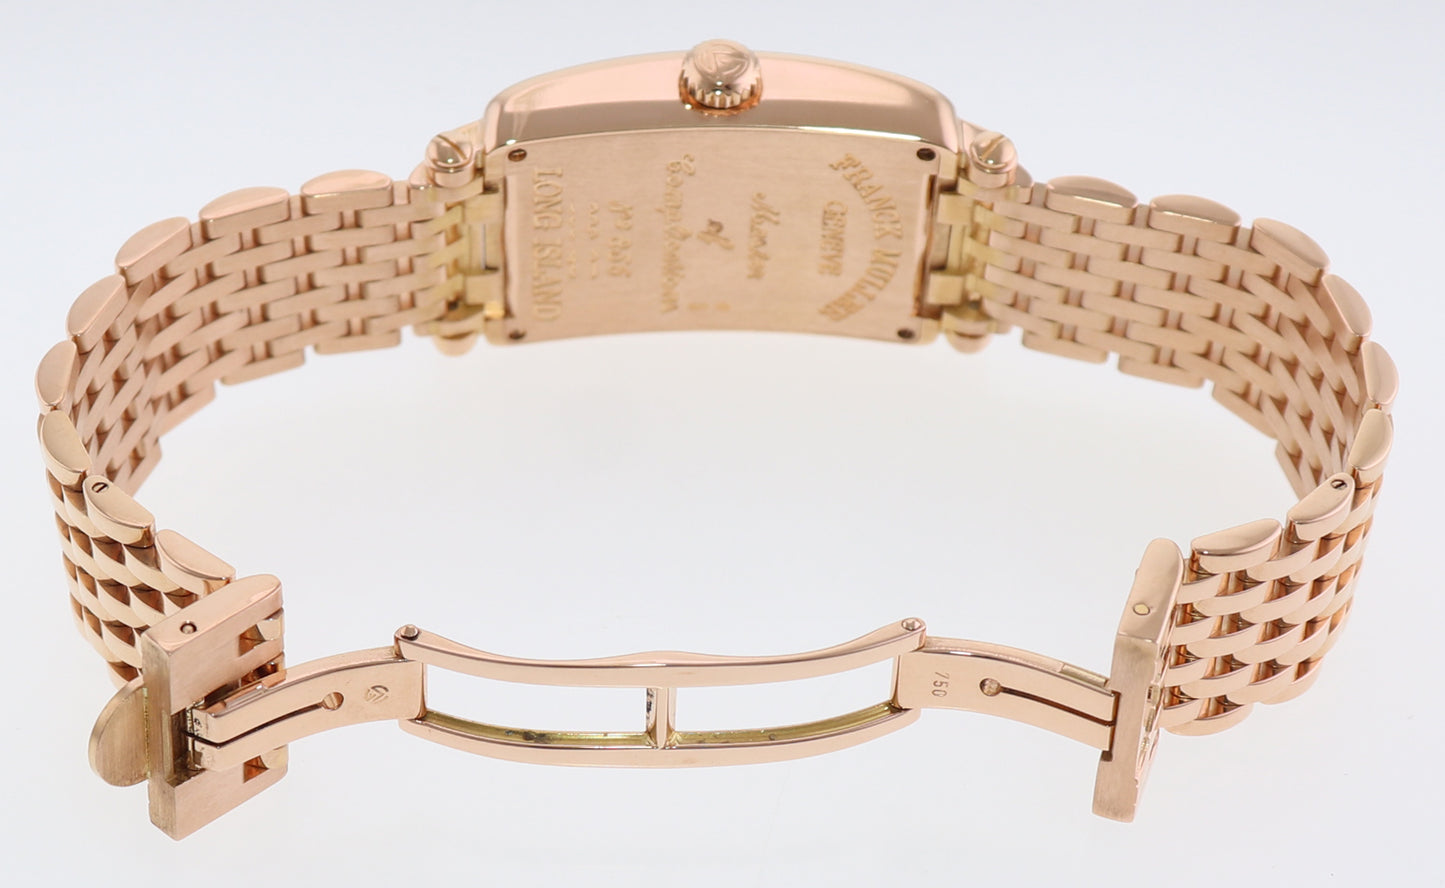 MINT Franck Muller Long Island 900QZ 18K Rose Gold Watch Box Papers